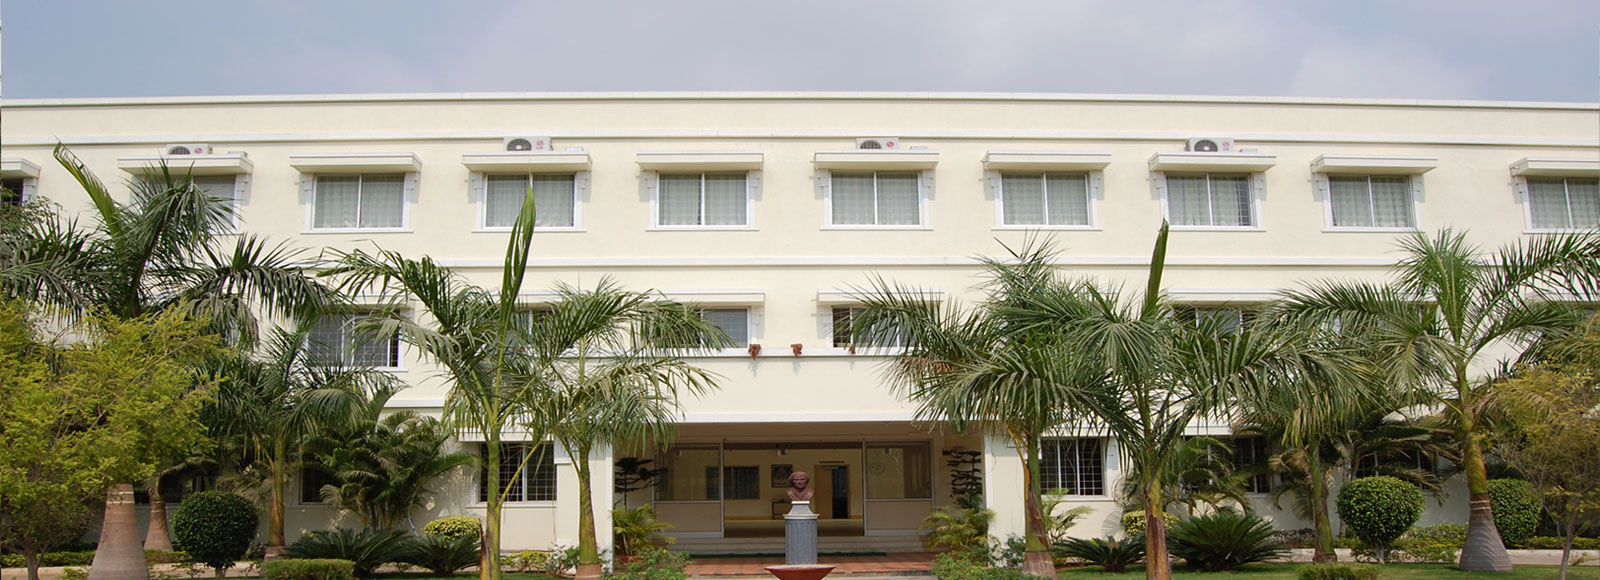 Sivaraj Naturopathy and Yoga Medical College, Salem Image